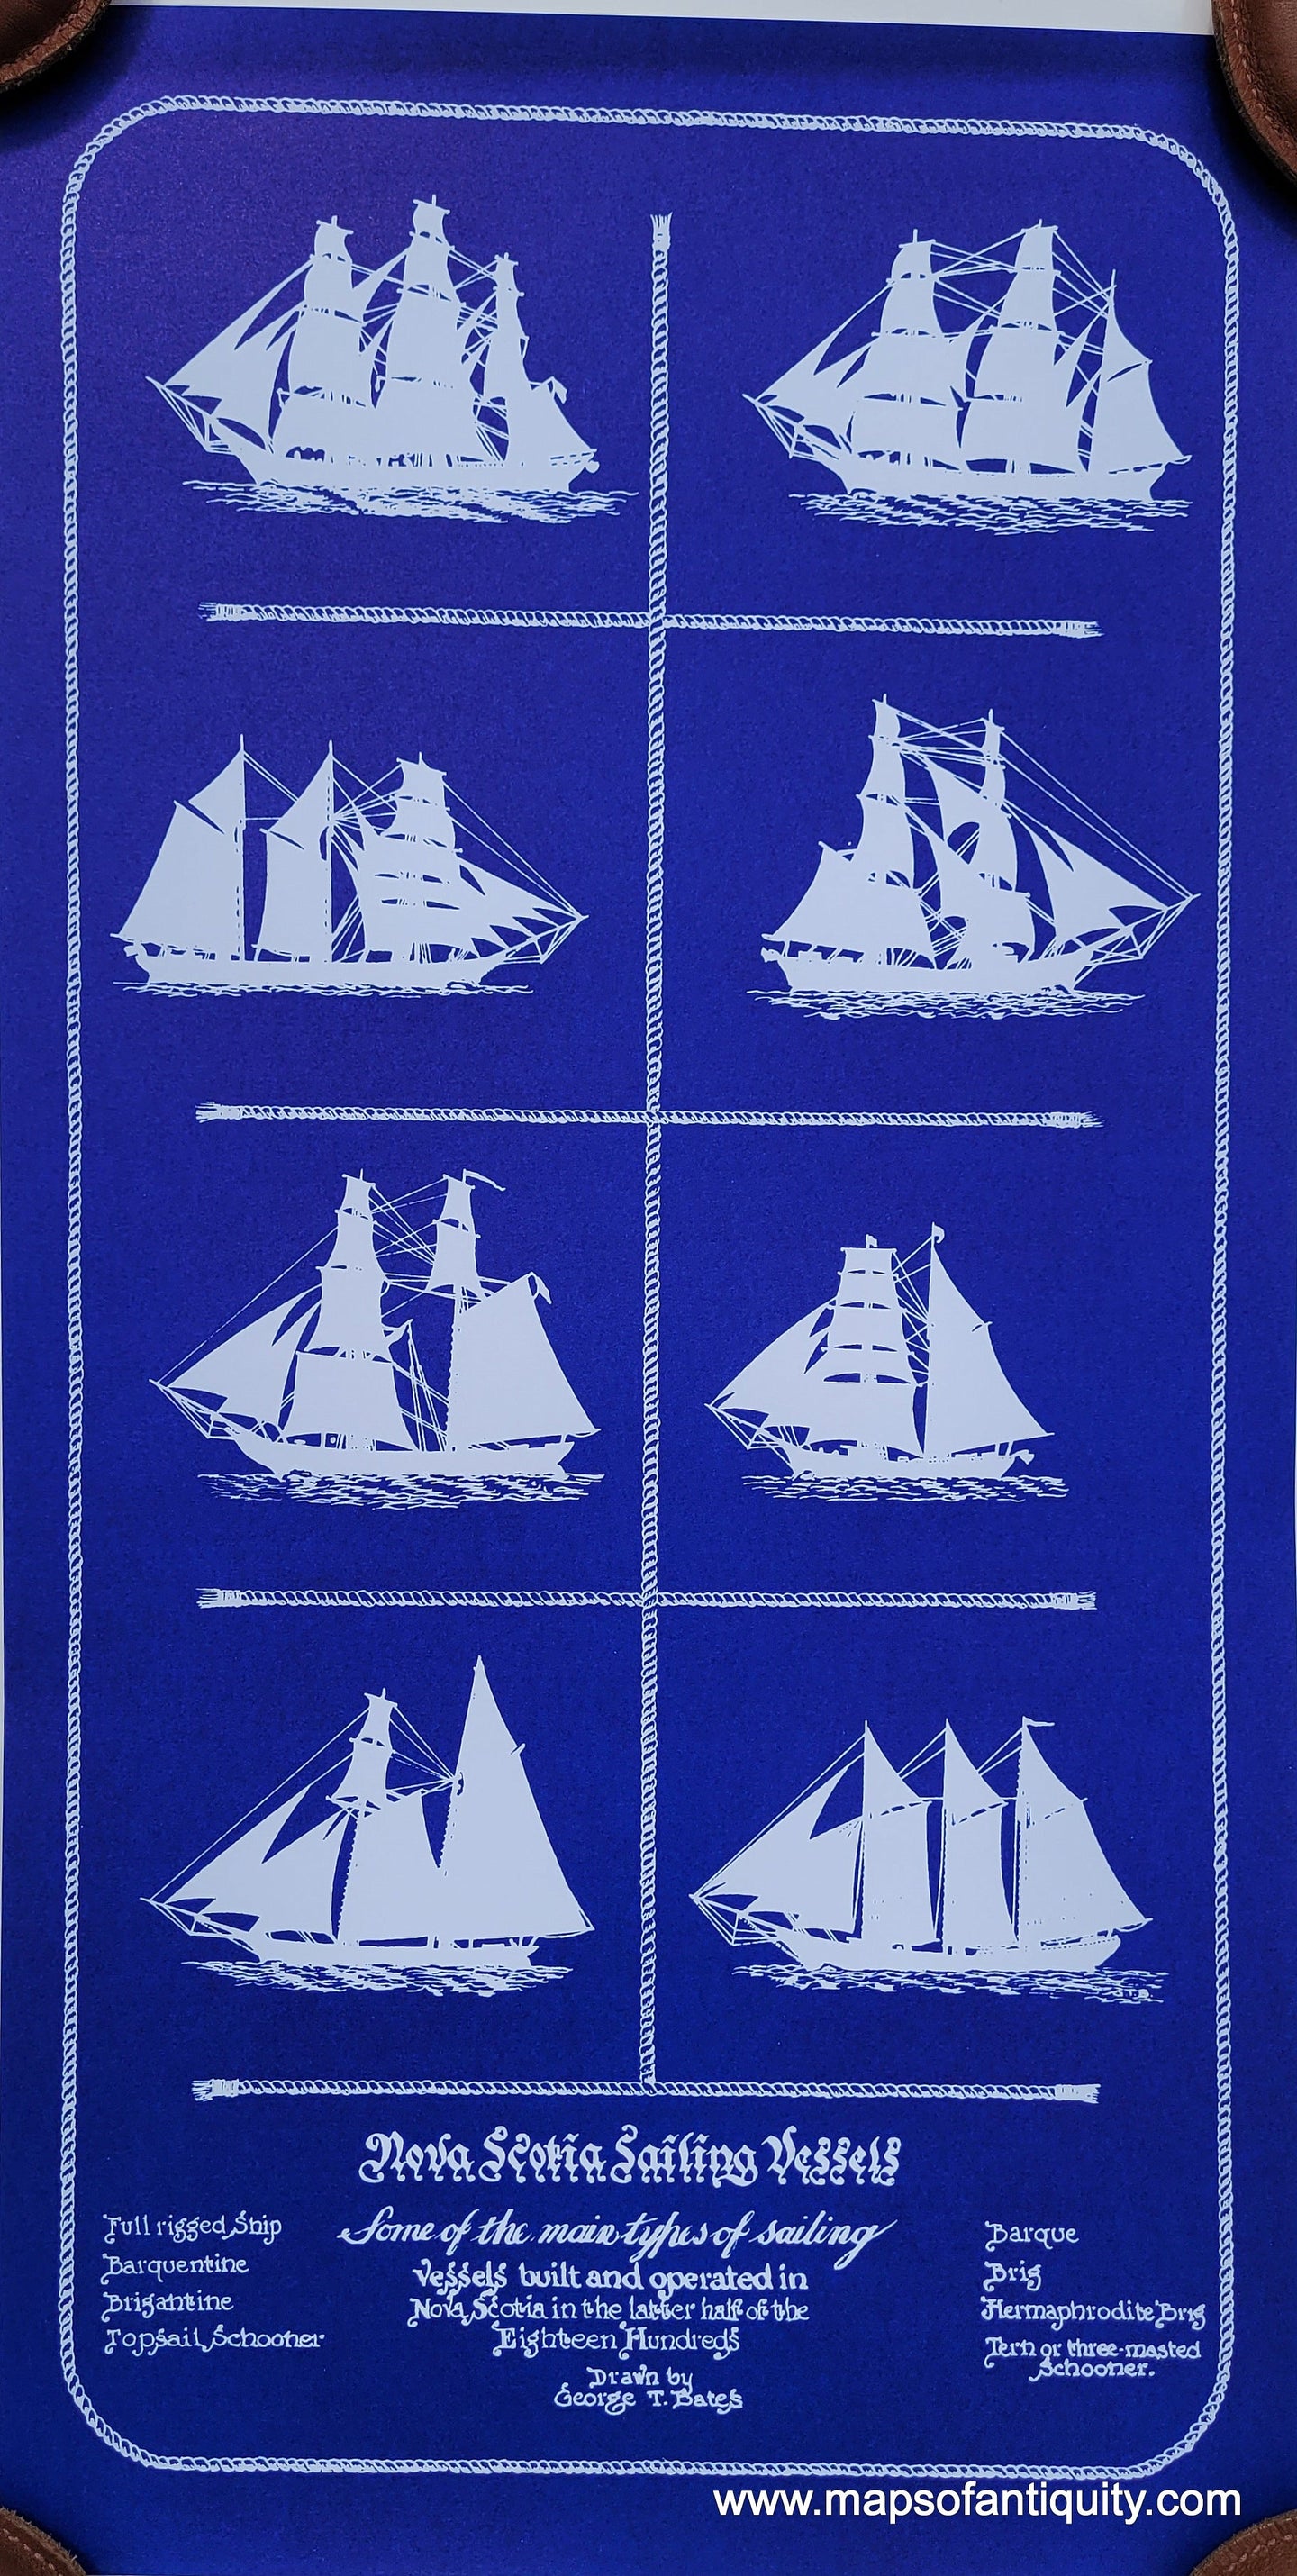 Reproduction-Nova-Scotia-Sailing-Vessels-Bates-Maps-Of-Antiquity